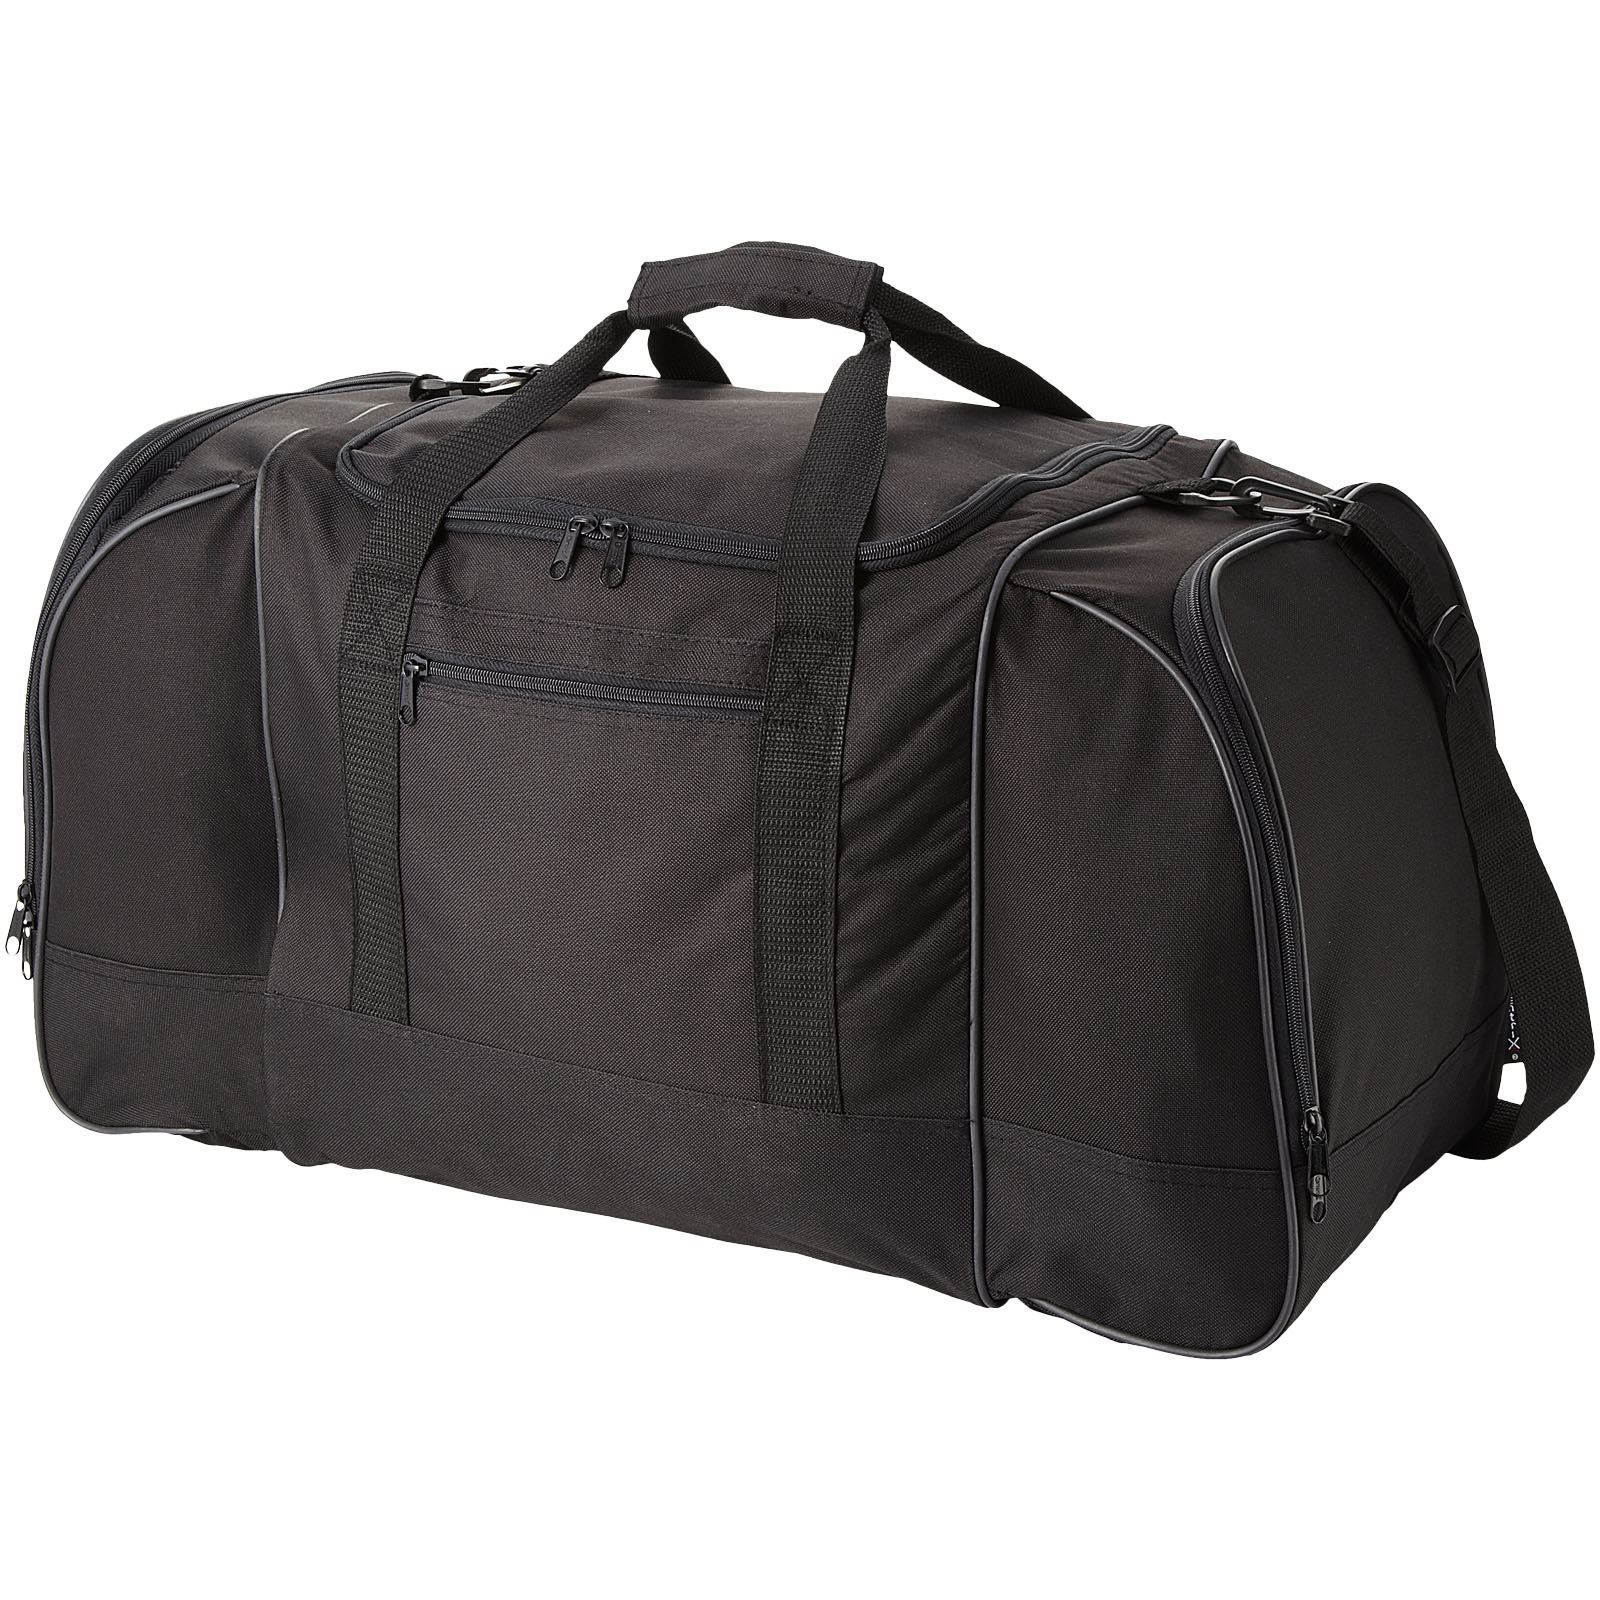 Advertising Travel bags - Nevada travel duffel bag 30L - 0